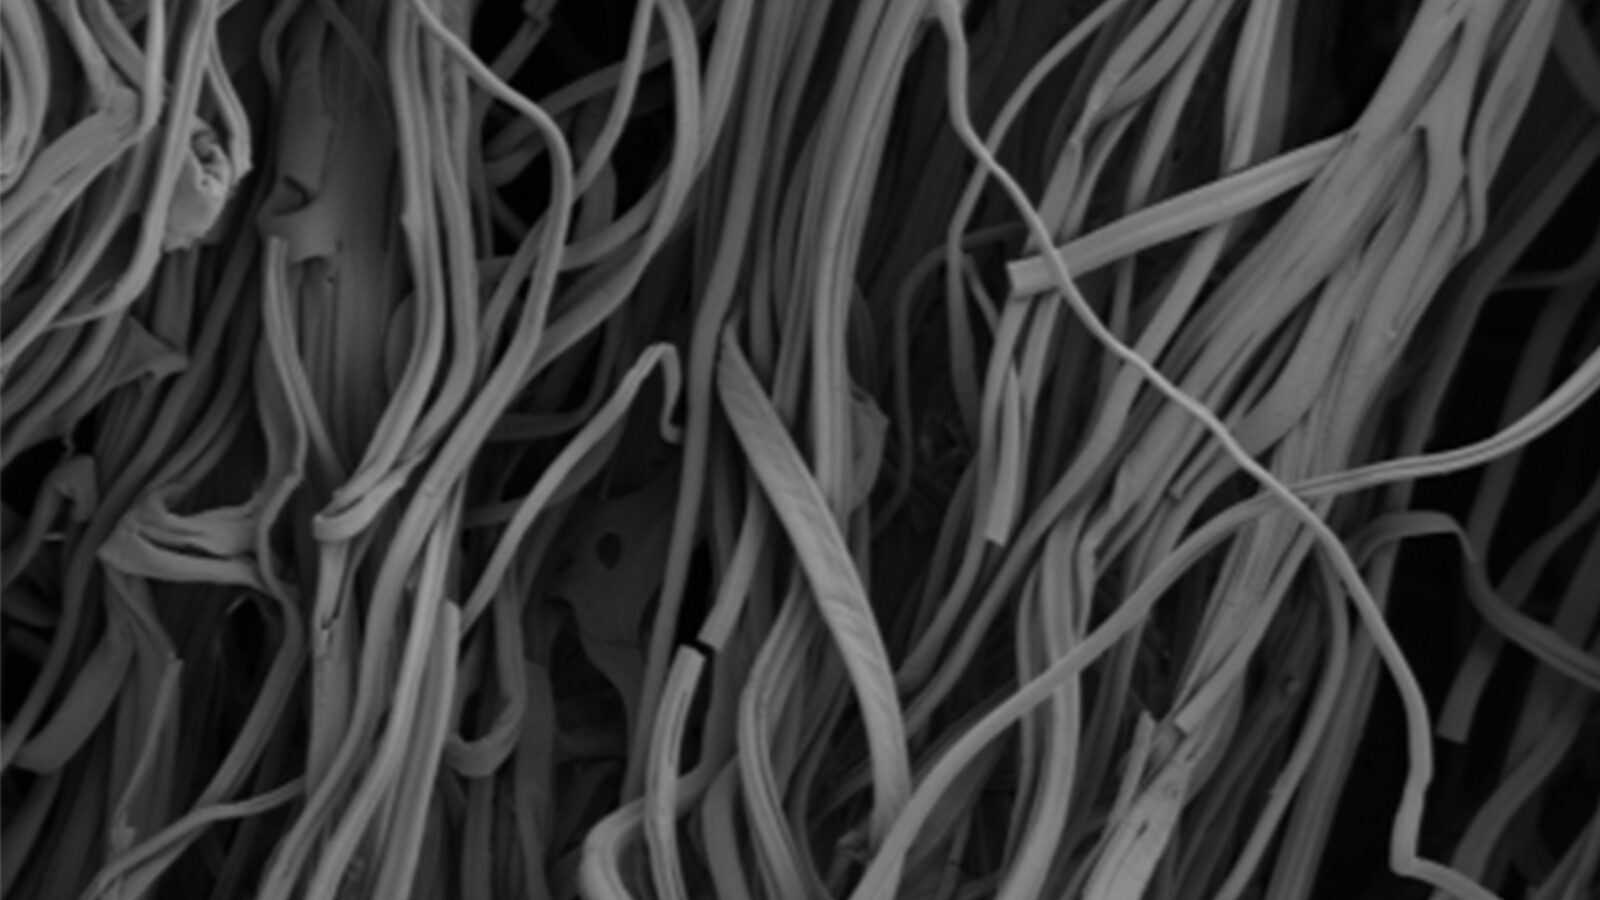 Images of gelatin fibers taken by scanning electron microscopy.